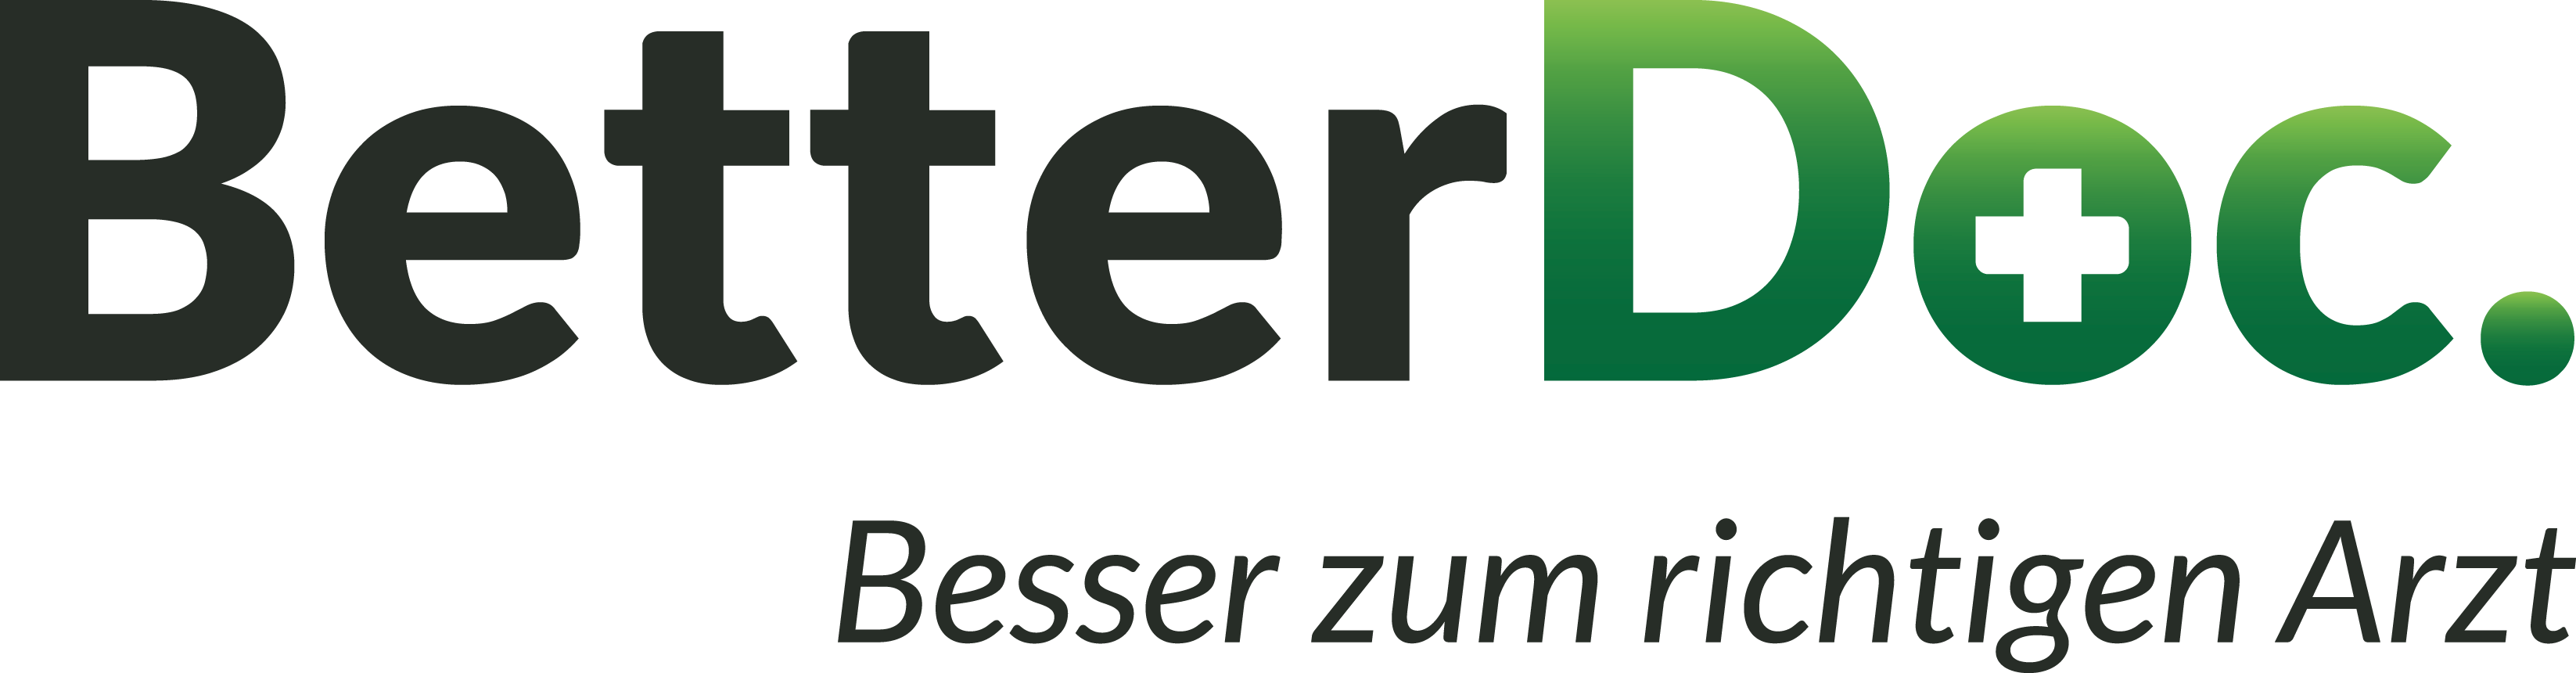 Praktikant (m/w/d) im Bereich Medical Research - BetterDoc GmbH - Logo